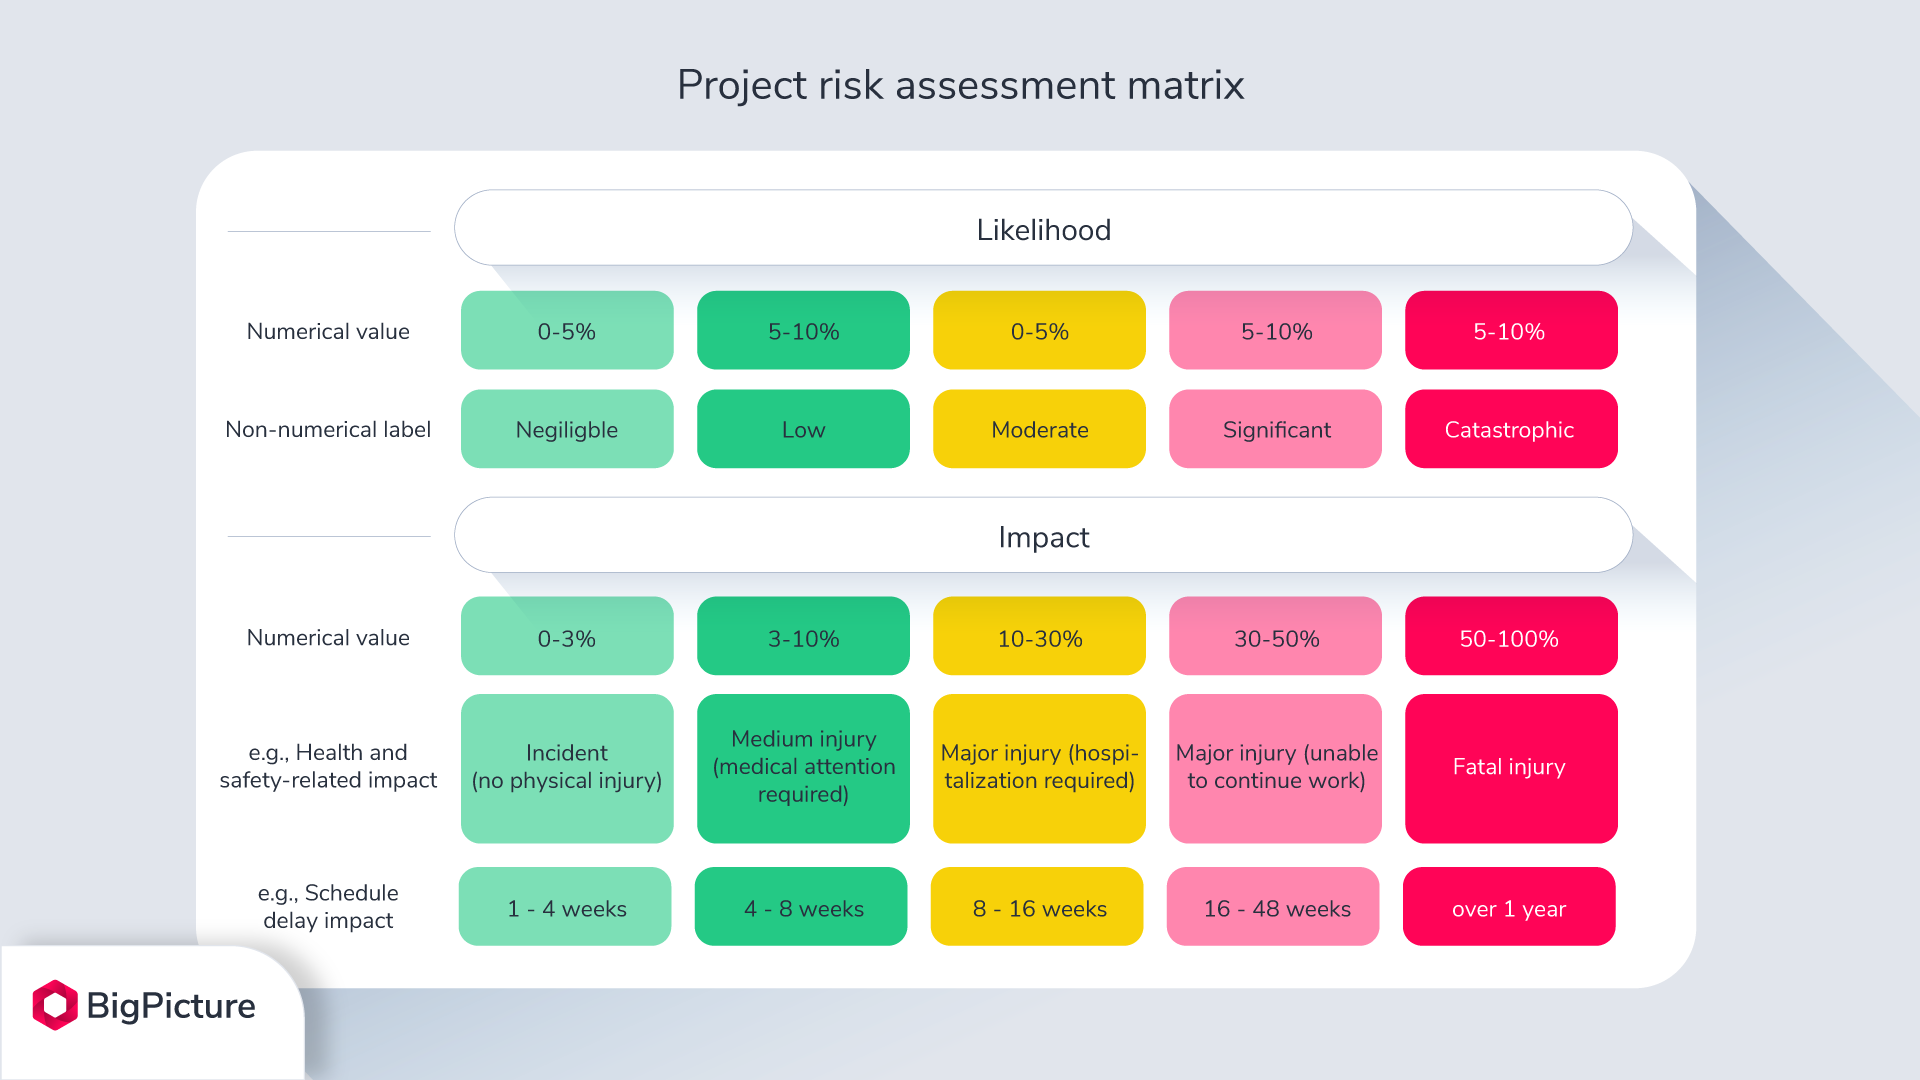 Project risk assessment matrix - example wth alternative values.